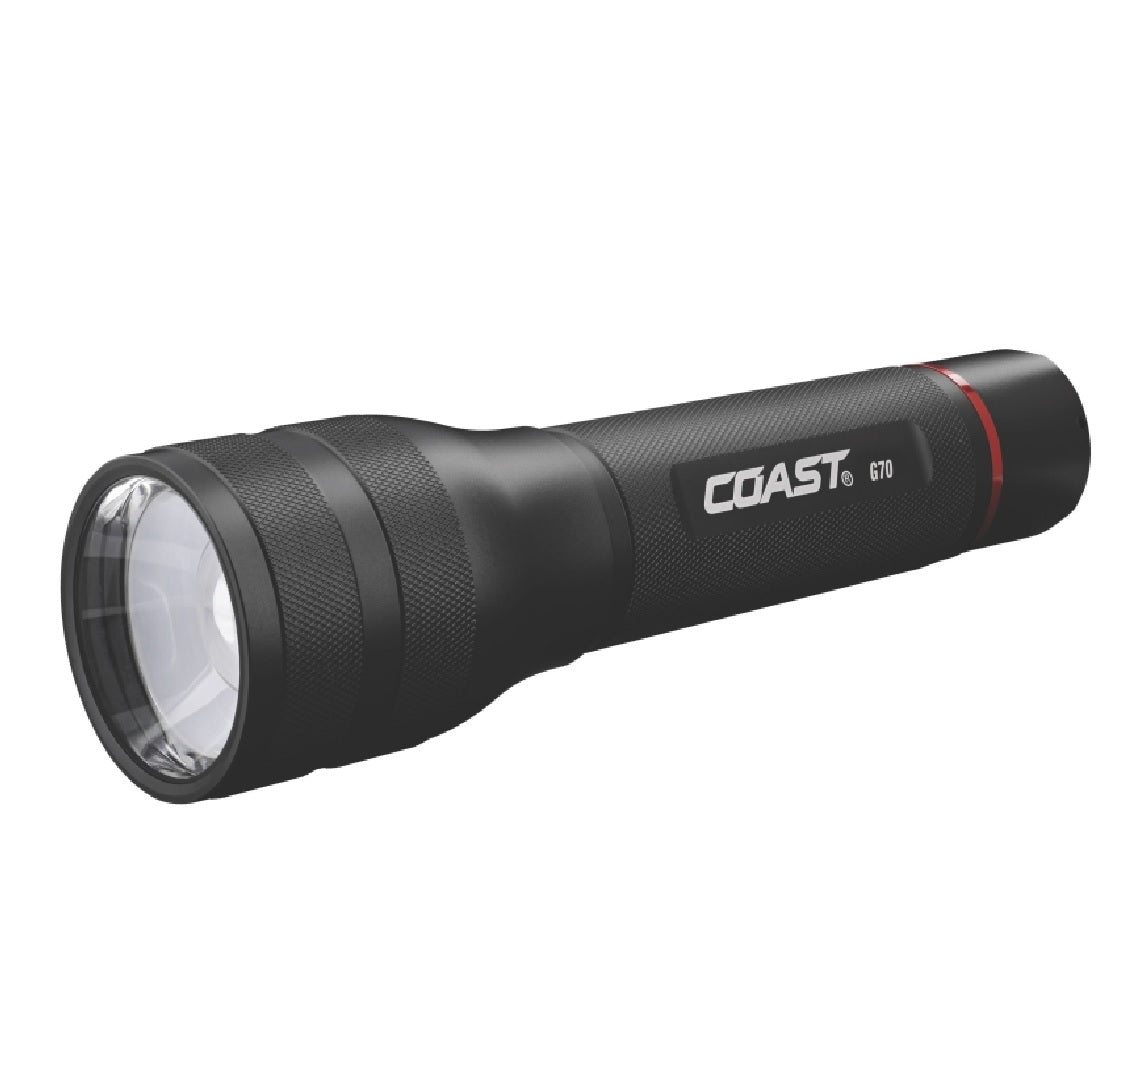 Coast G70 LED Lamp Flashlight, Alkaline Battery